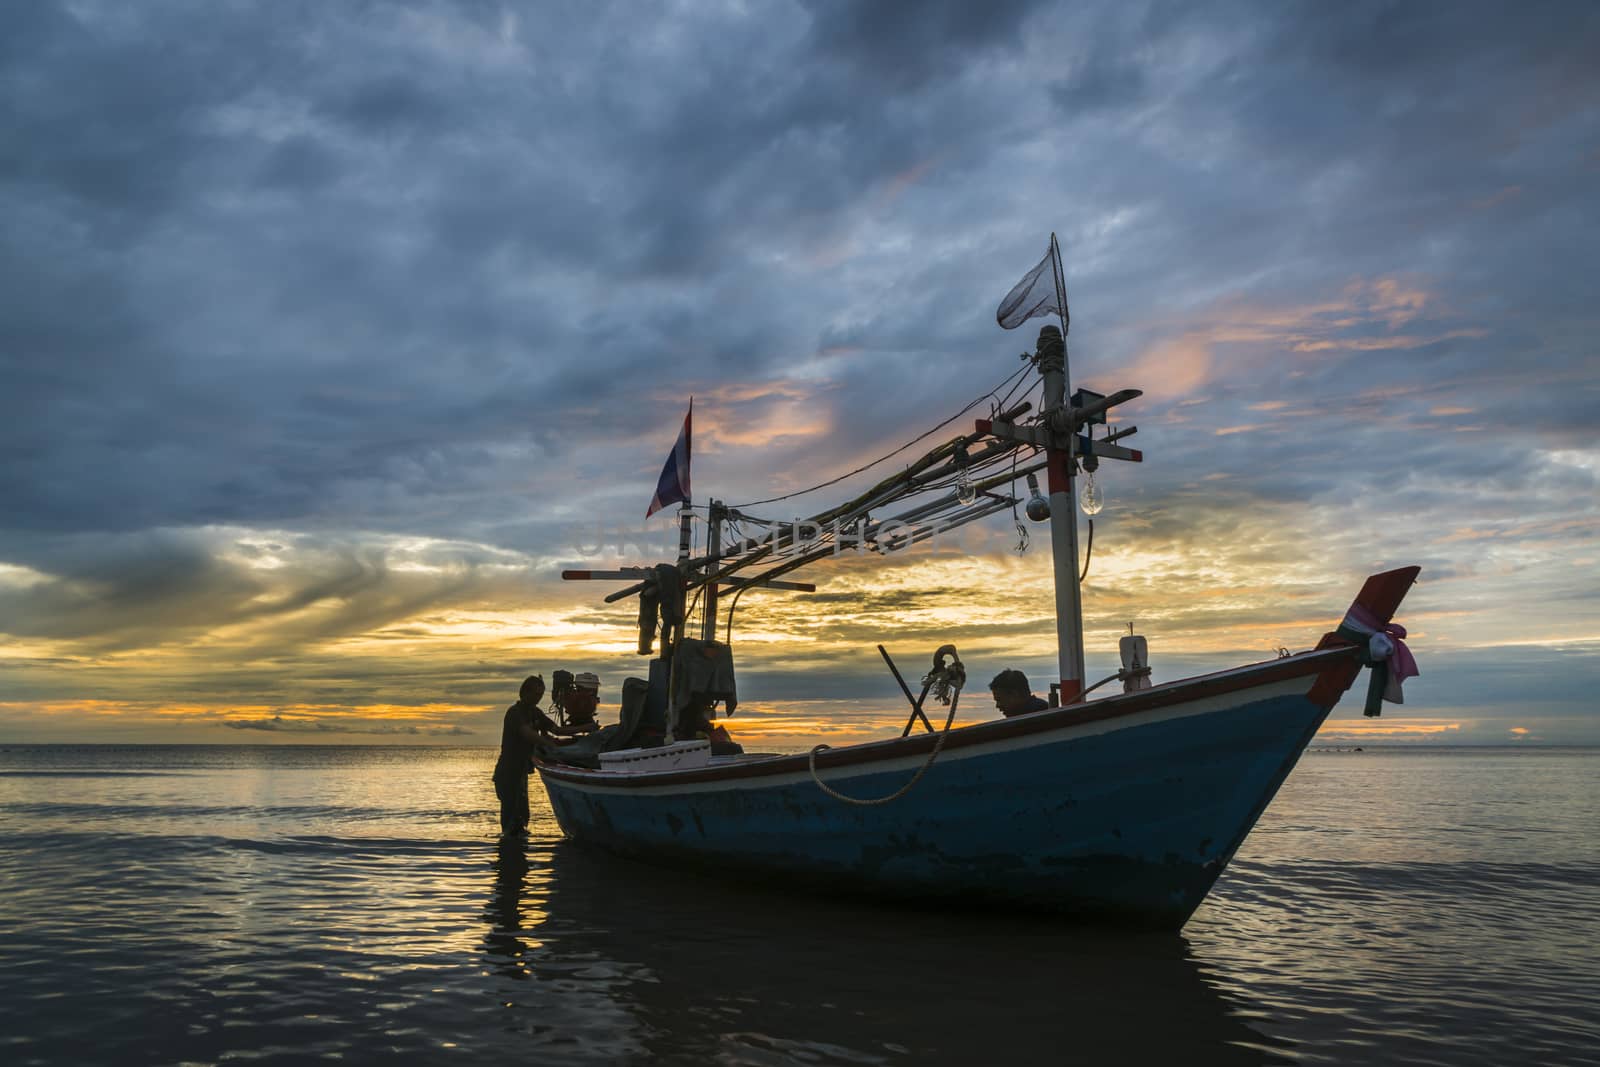 Tropical fishing boat in dawn by hongee